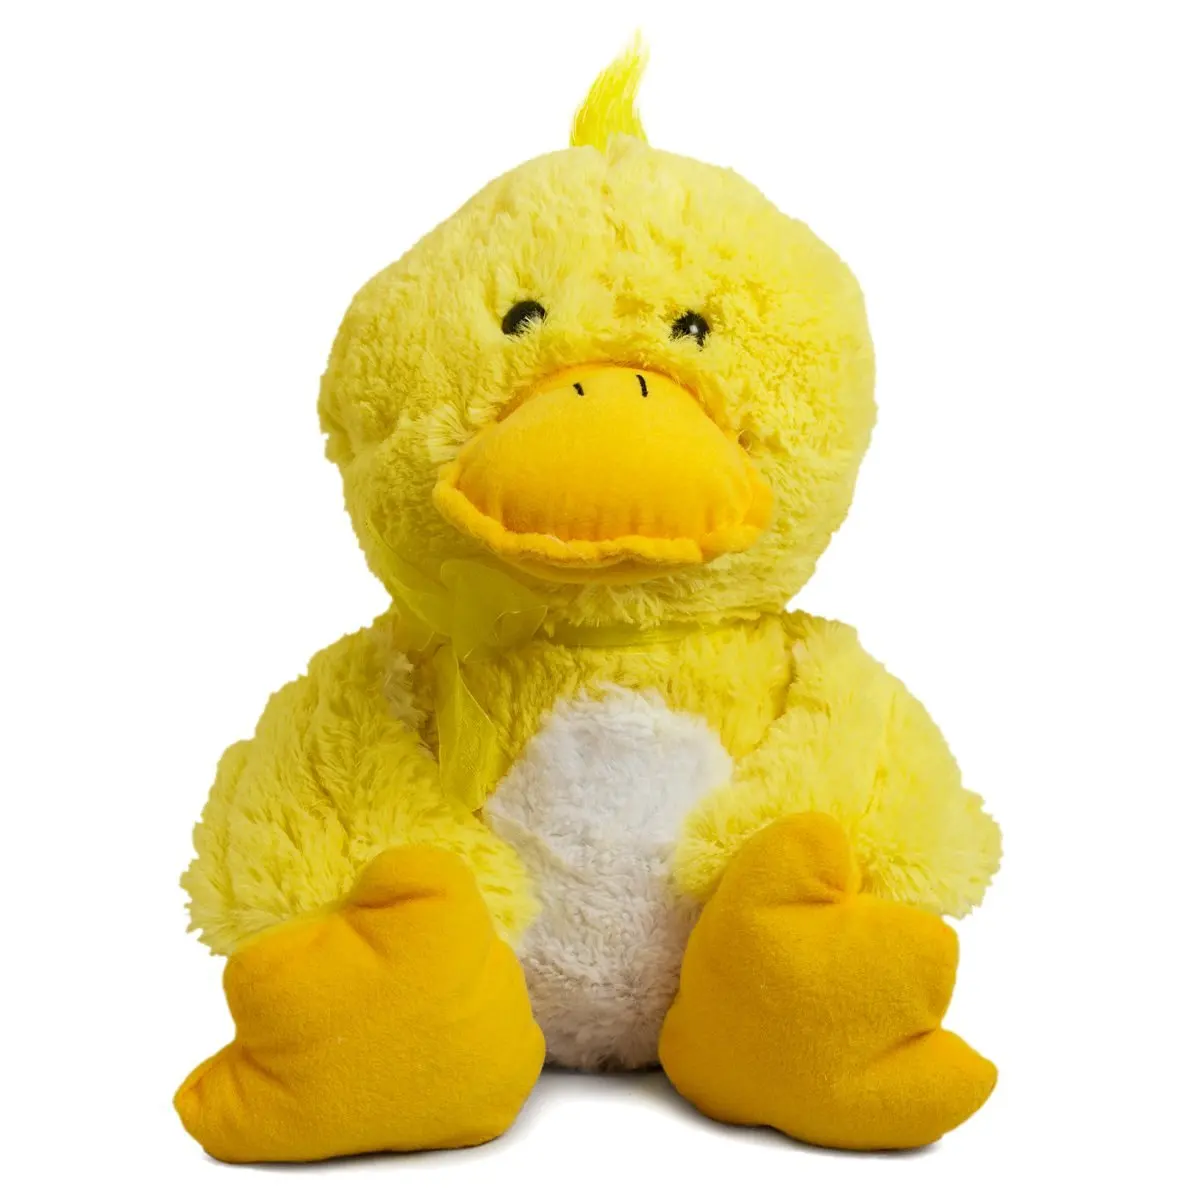 ducky momo toy